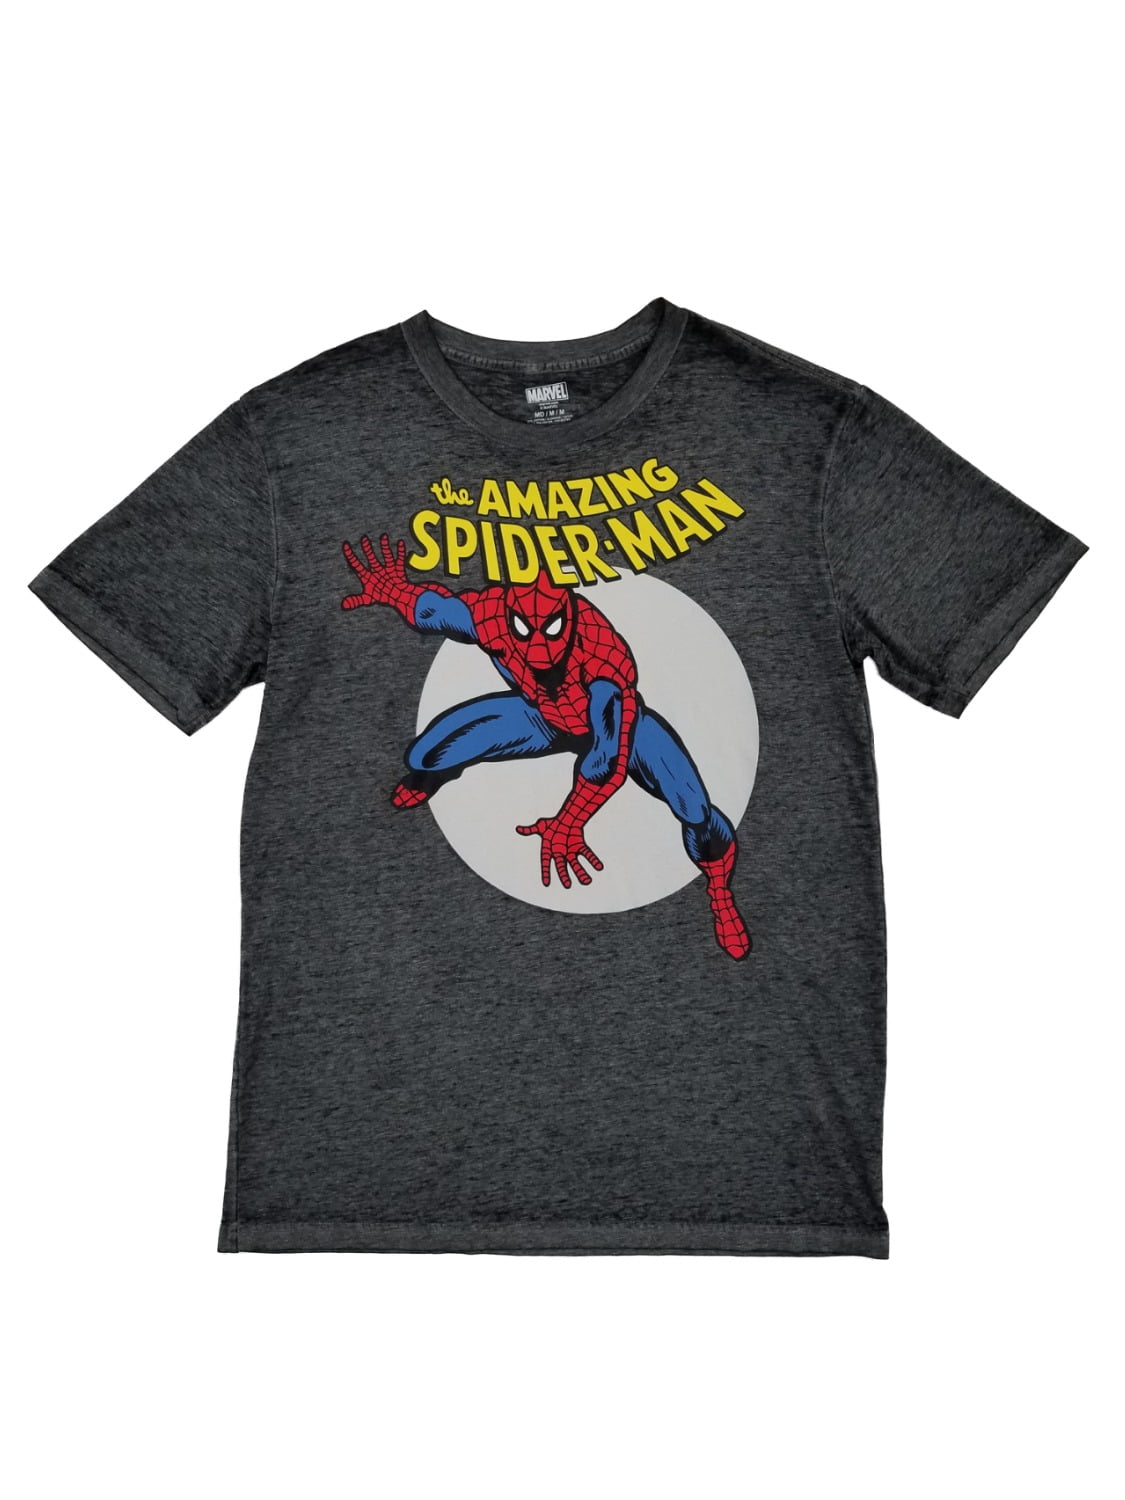 Marvel Mens Heather Gray Medium T-Shirt Spider-Man Amazing The Graphic